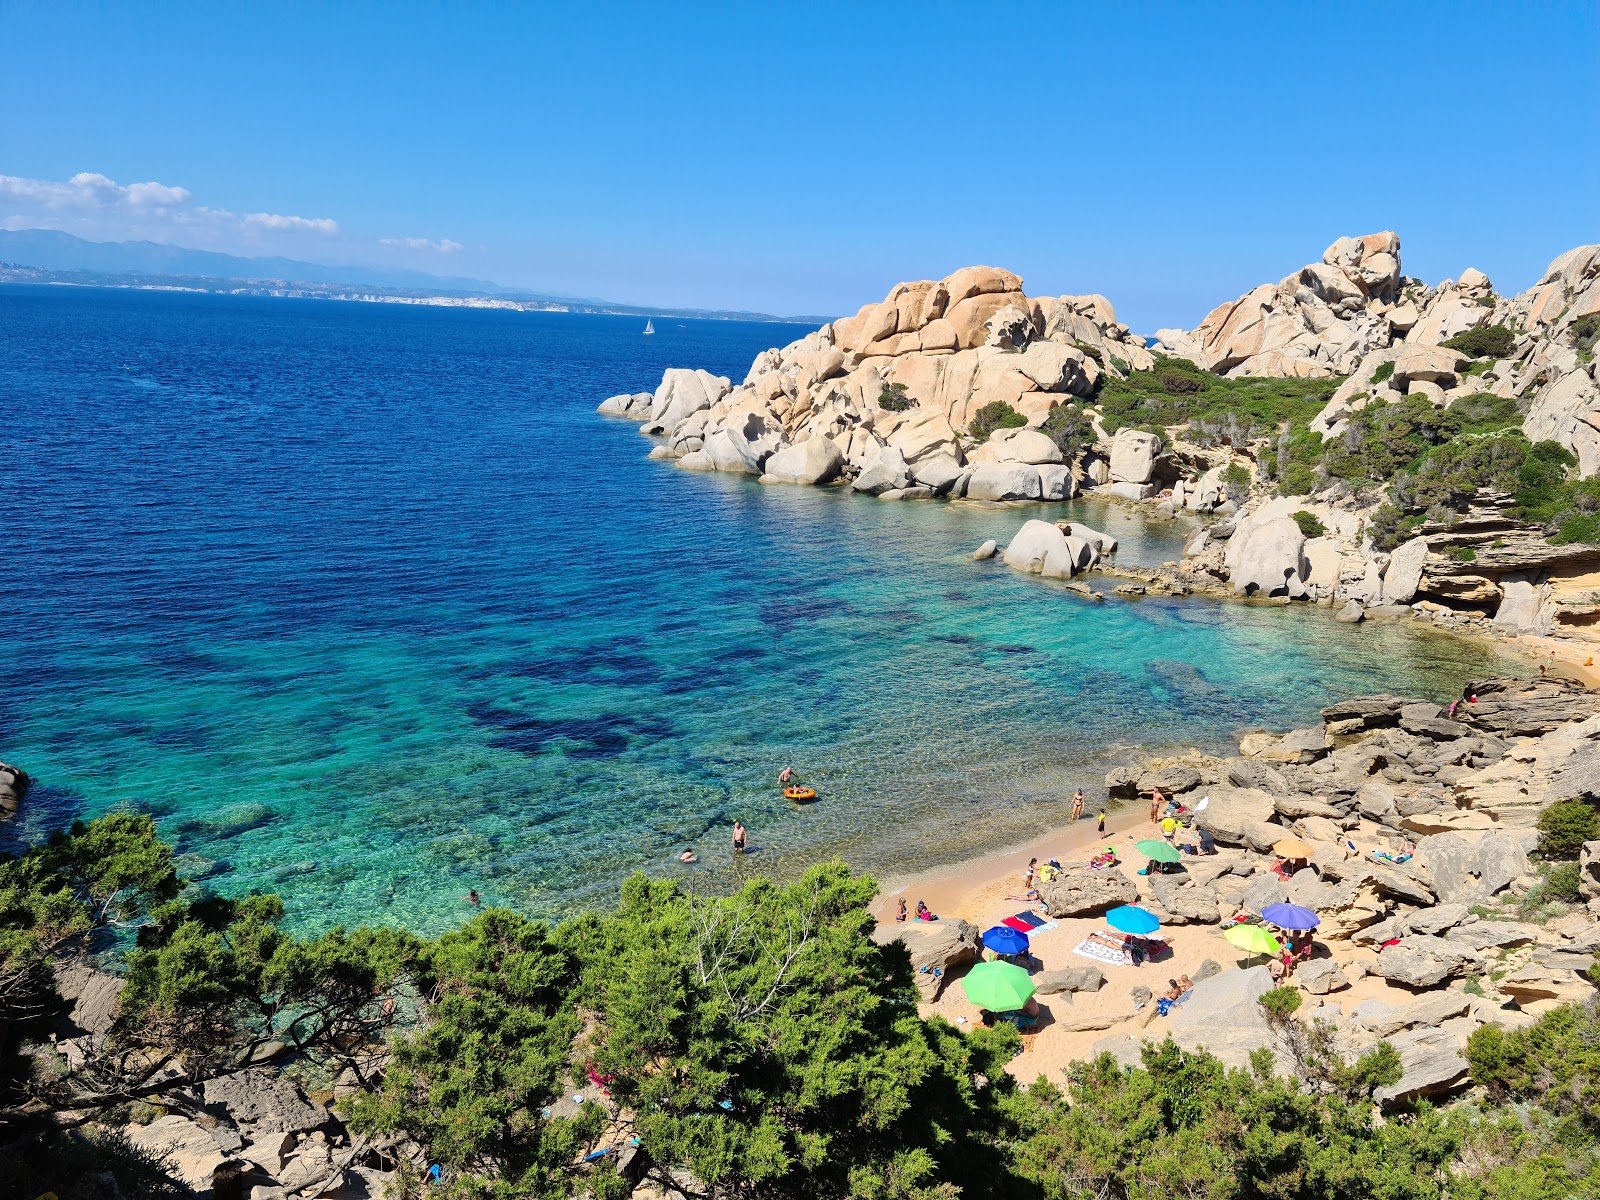 Photo of Spiaggia di Cala Spinosa with small bay